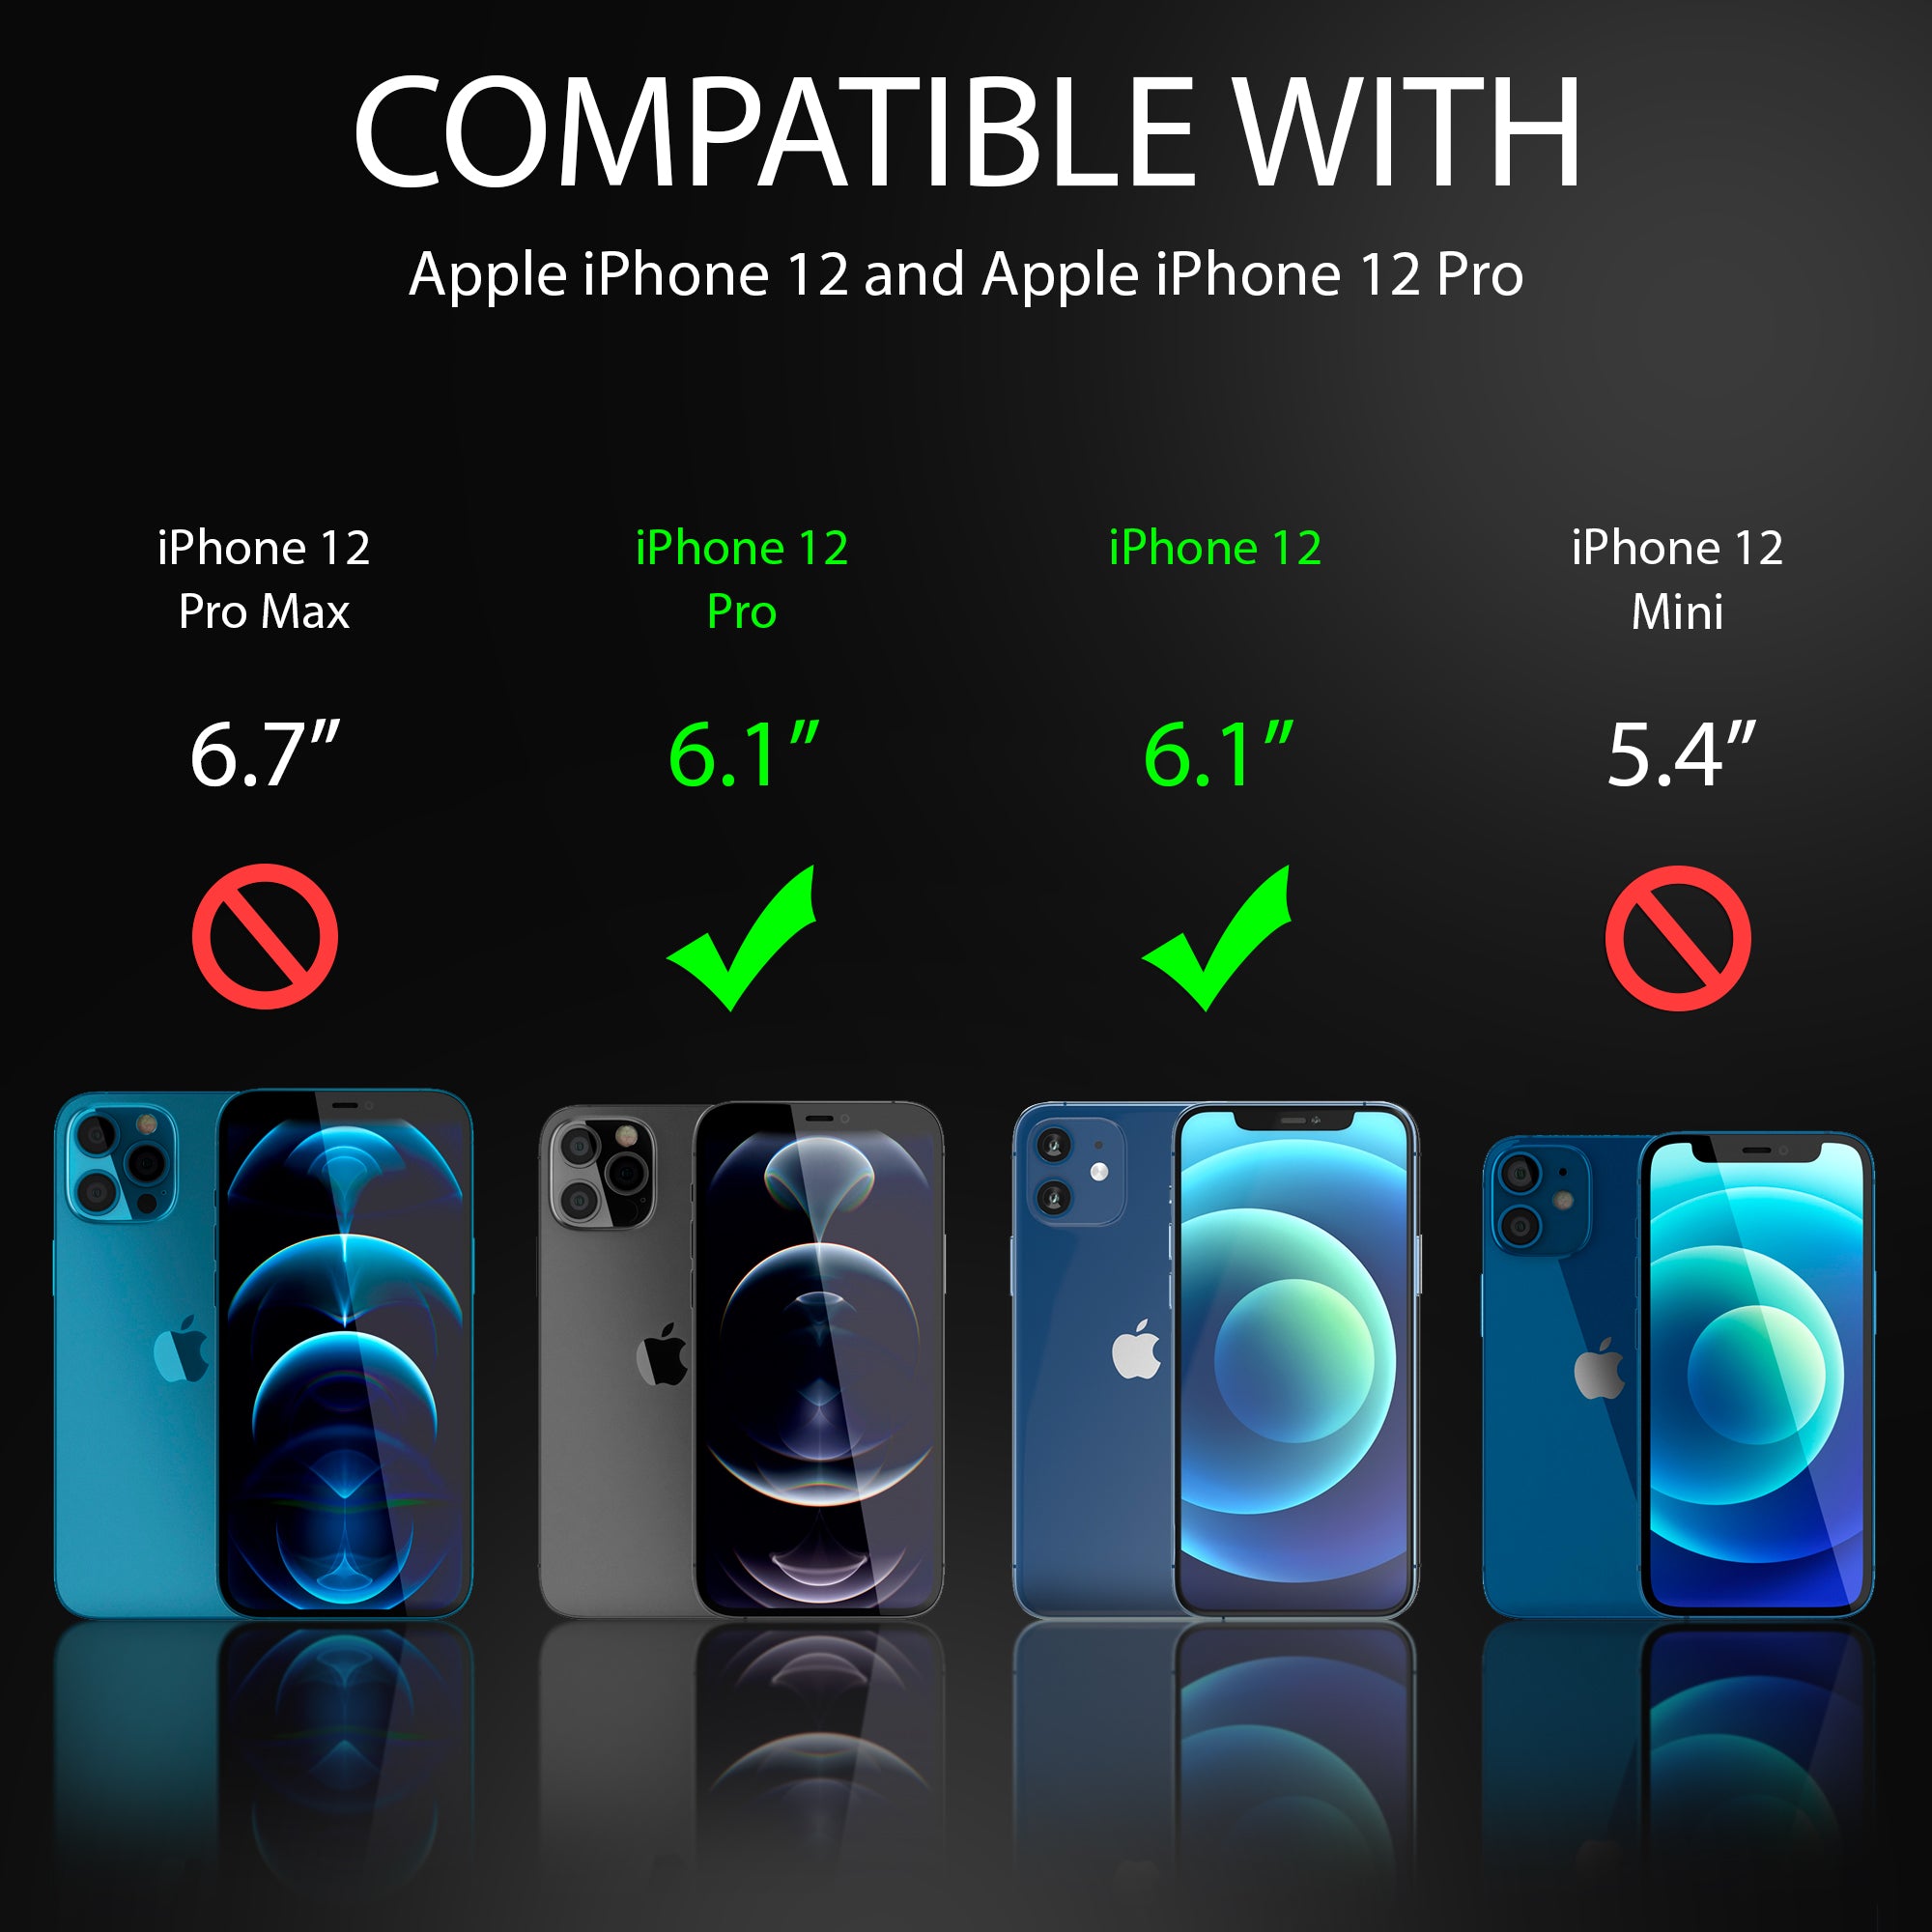 Apple iPhone 12 / iPhone 12 Pro Case Transparent Cover